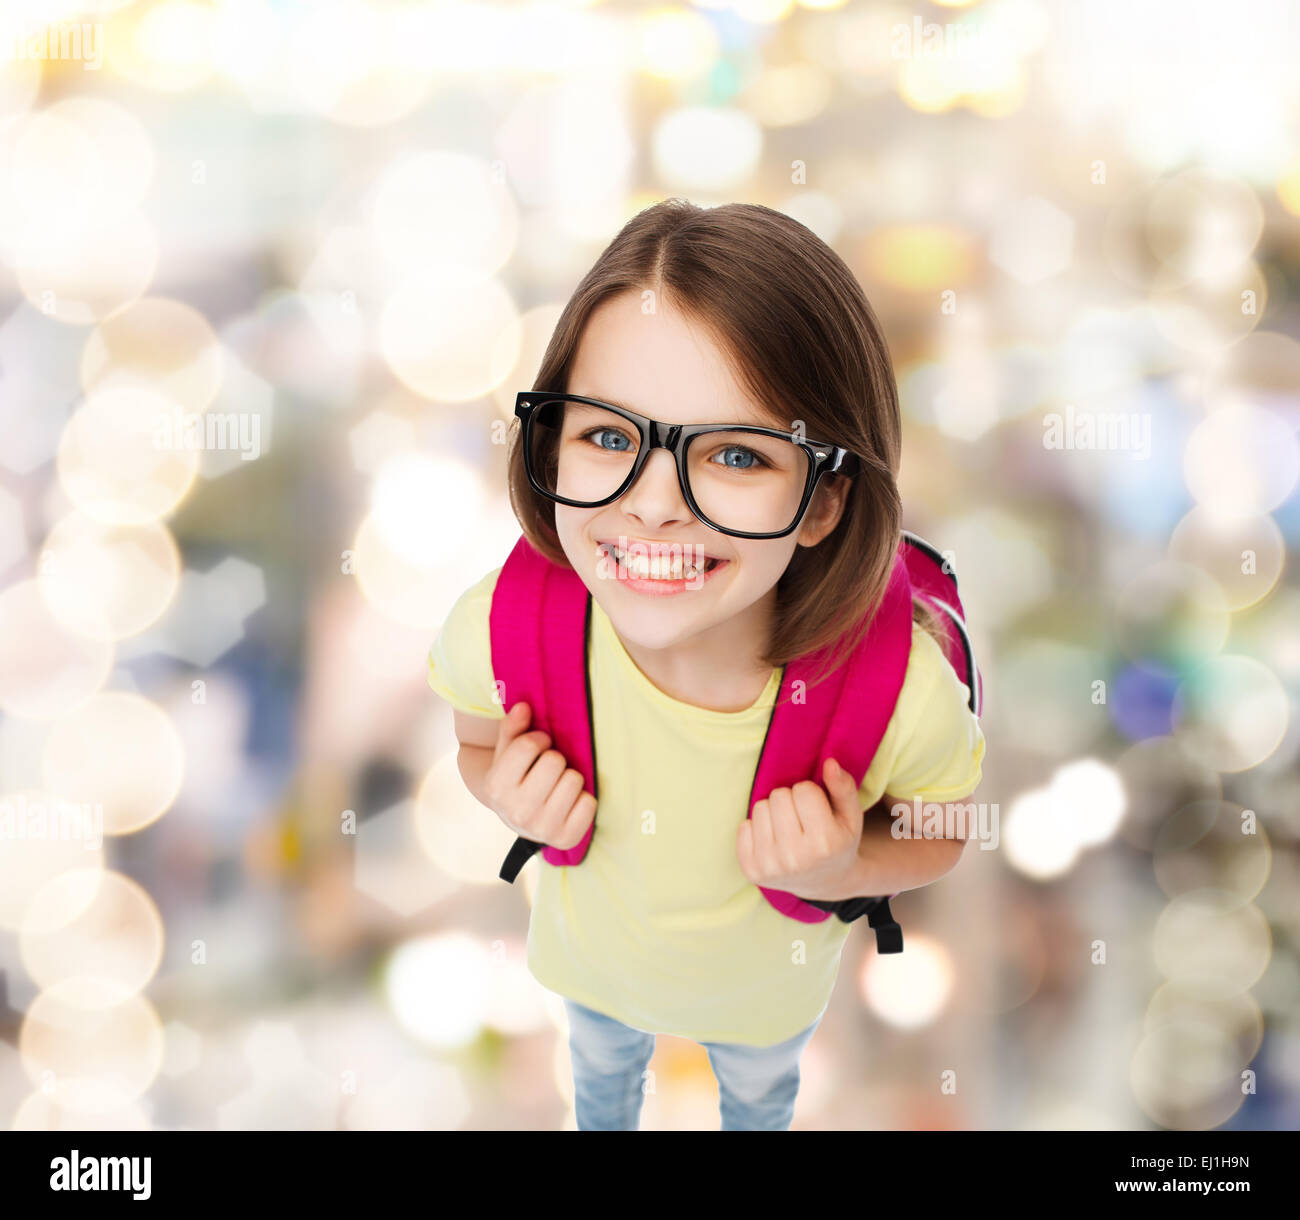 happy smiling teenage girl in eyeglasses with bag Stock Photo